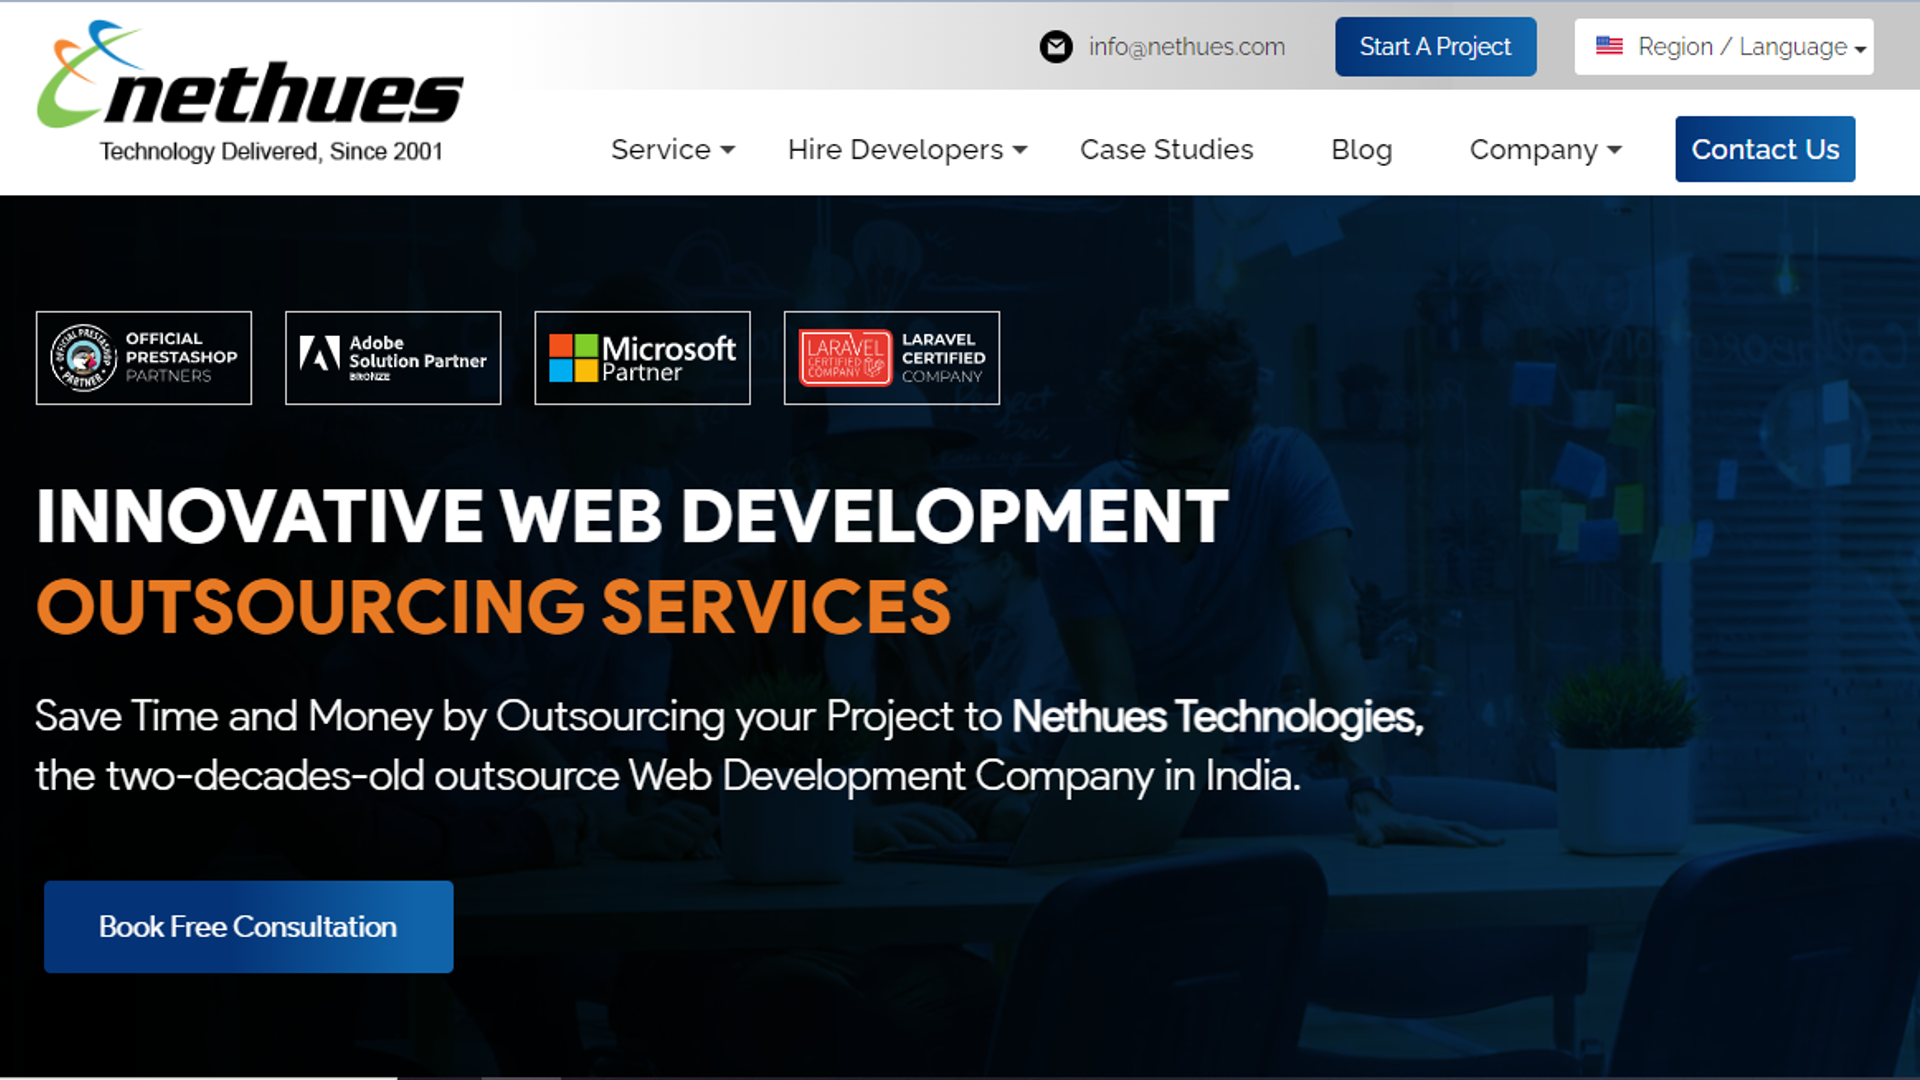 Nethues Technologies Pvt. Ltd